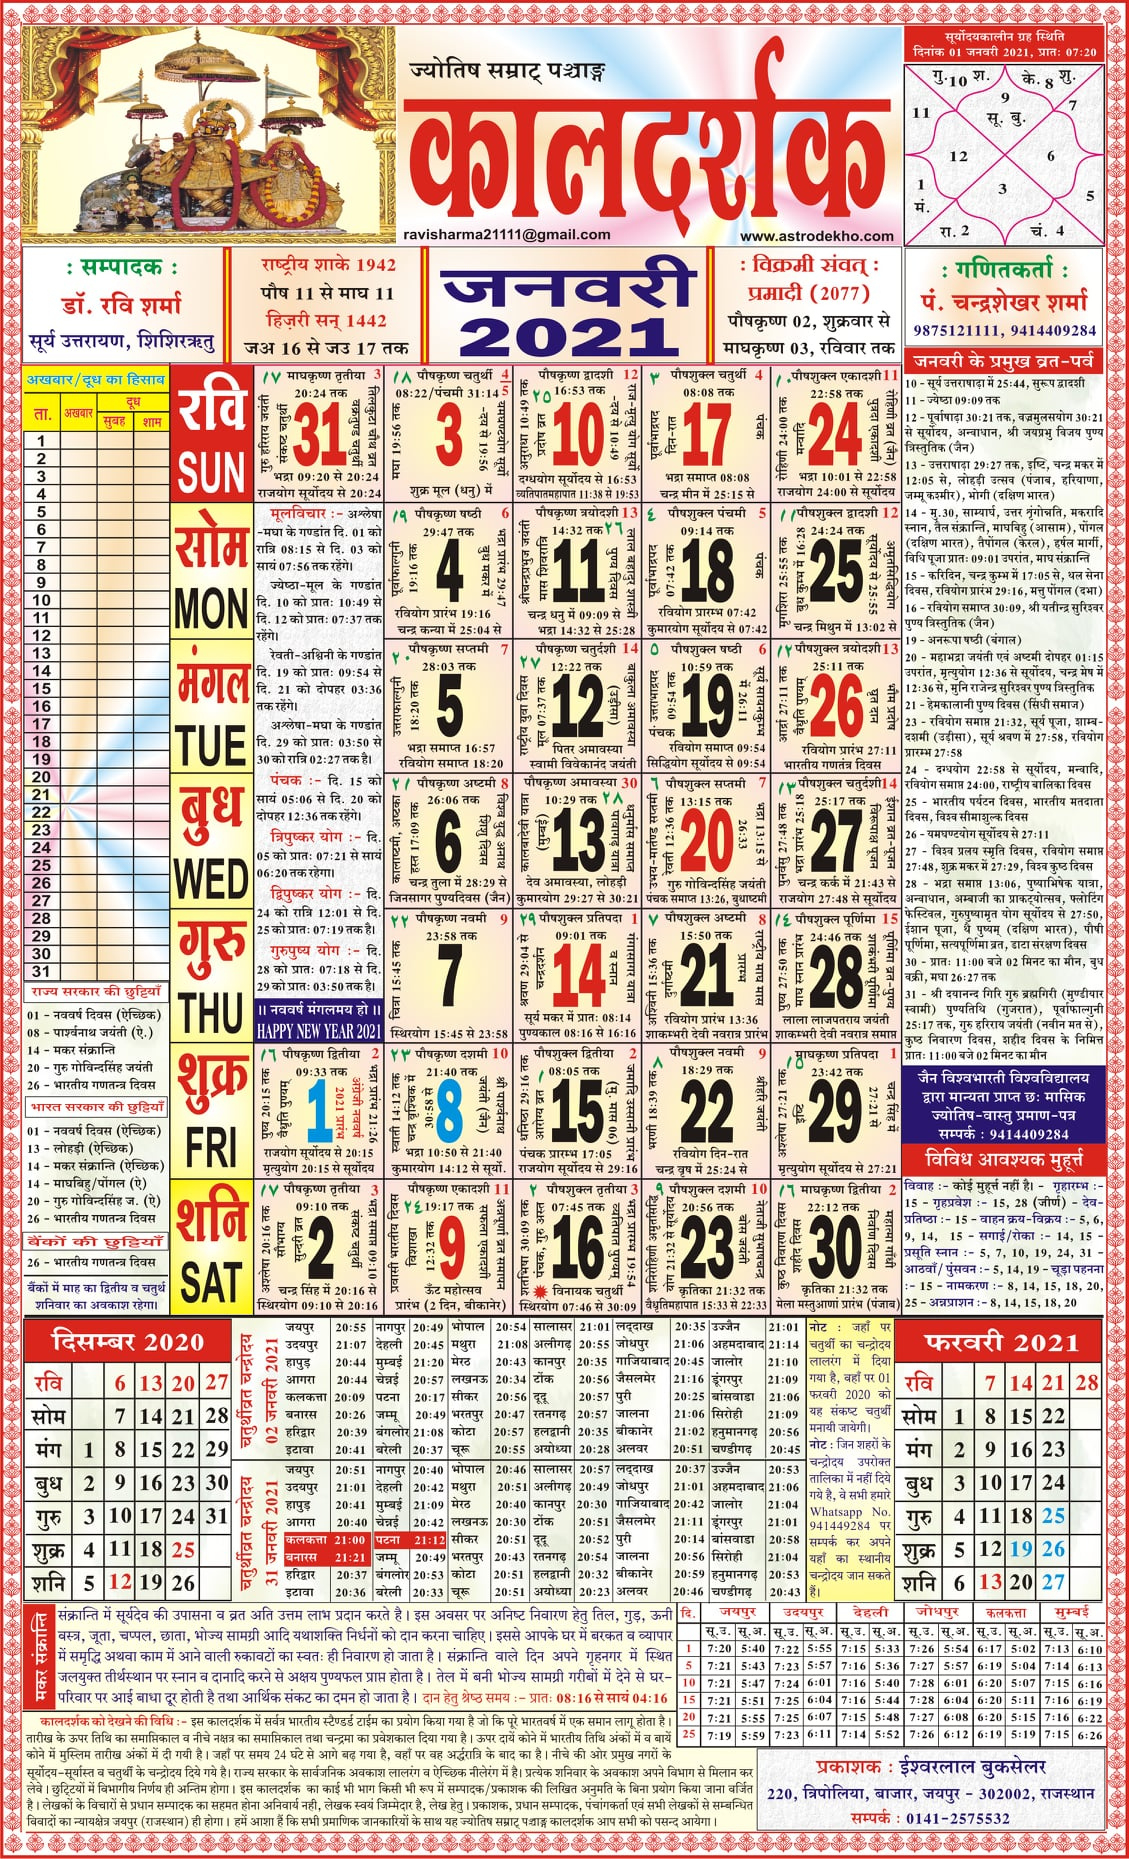 Hindu Festival Calendar 2021 Baps Calendar December 2021